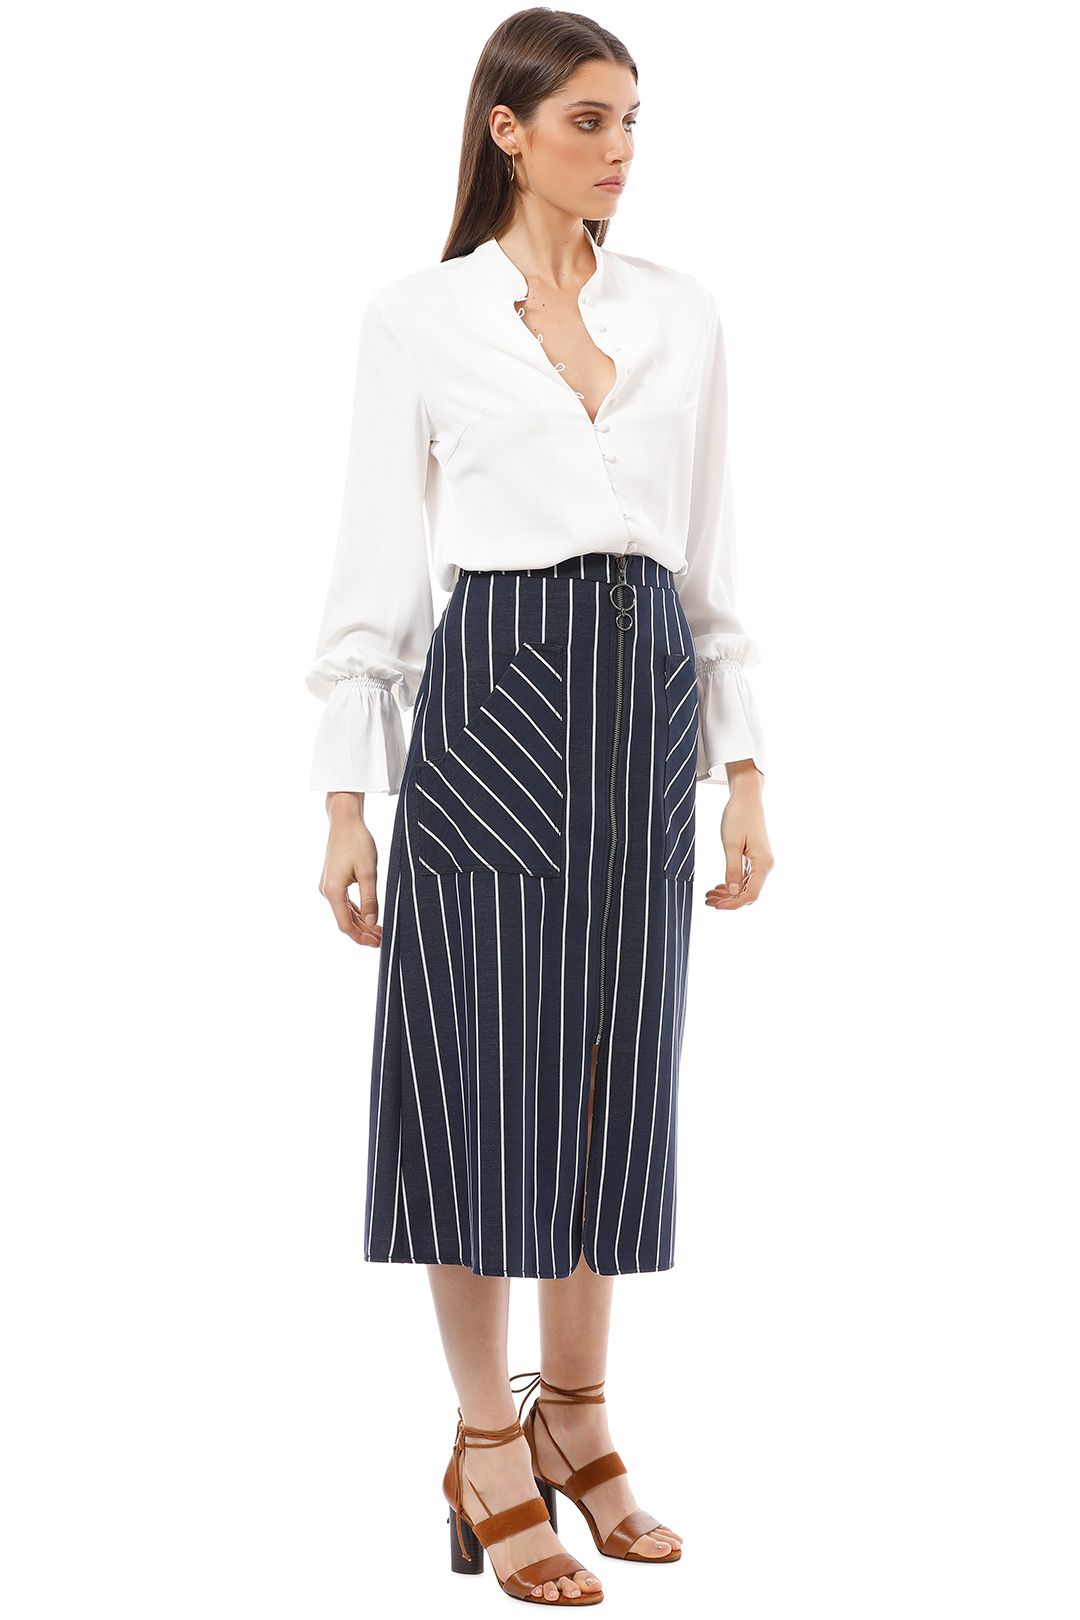 Veronika Maine - Textured Stripe Zip Skirt - Navy - Side